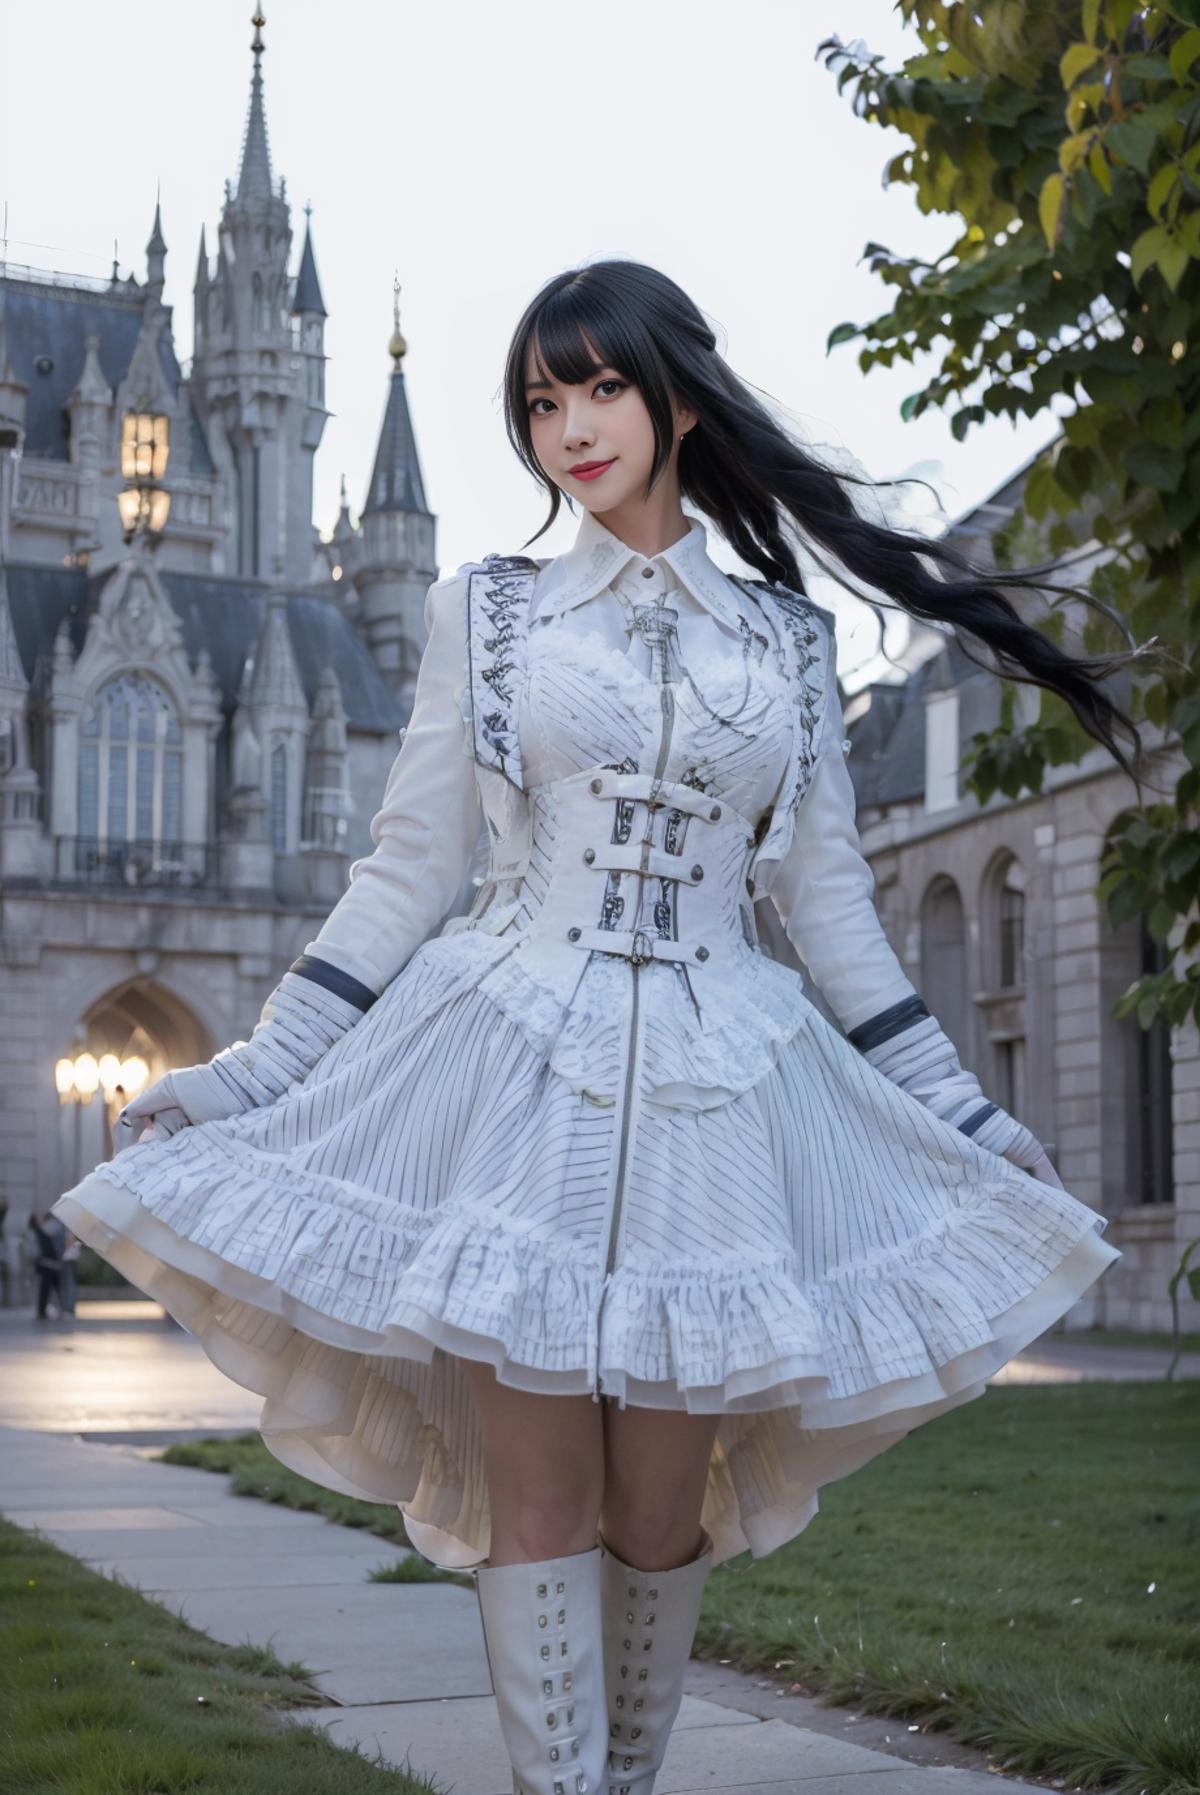 Some cool dress | 一些很酷的裙子 image by cyberAngel_